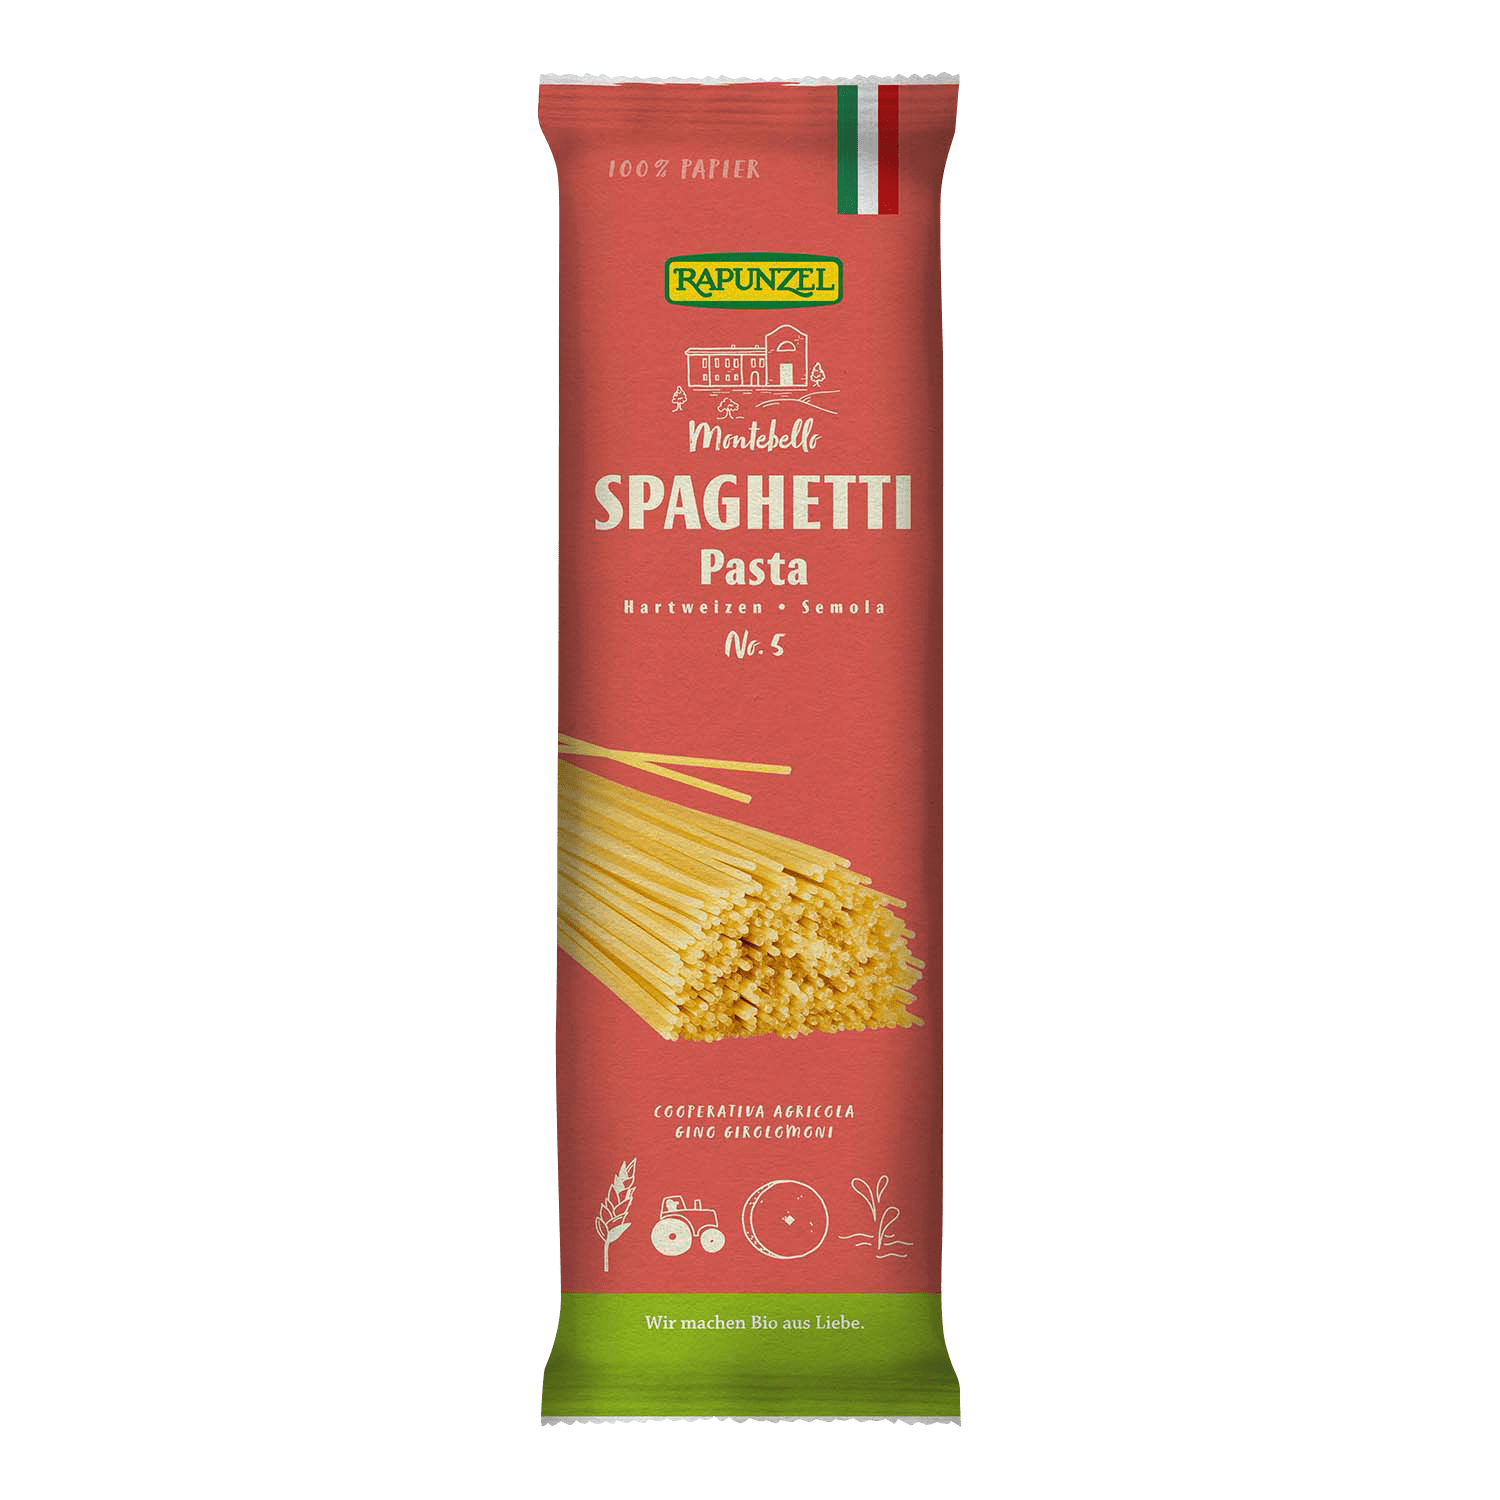 Spaghetti Semola No.5, Organic, 500g